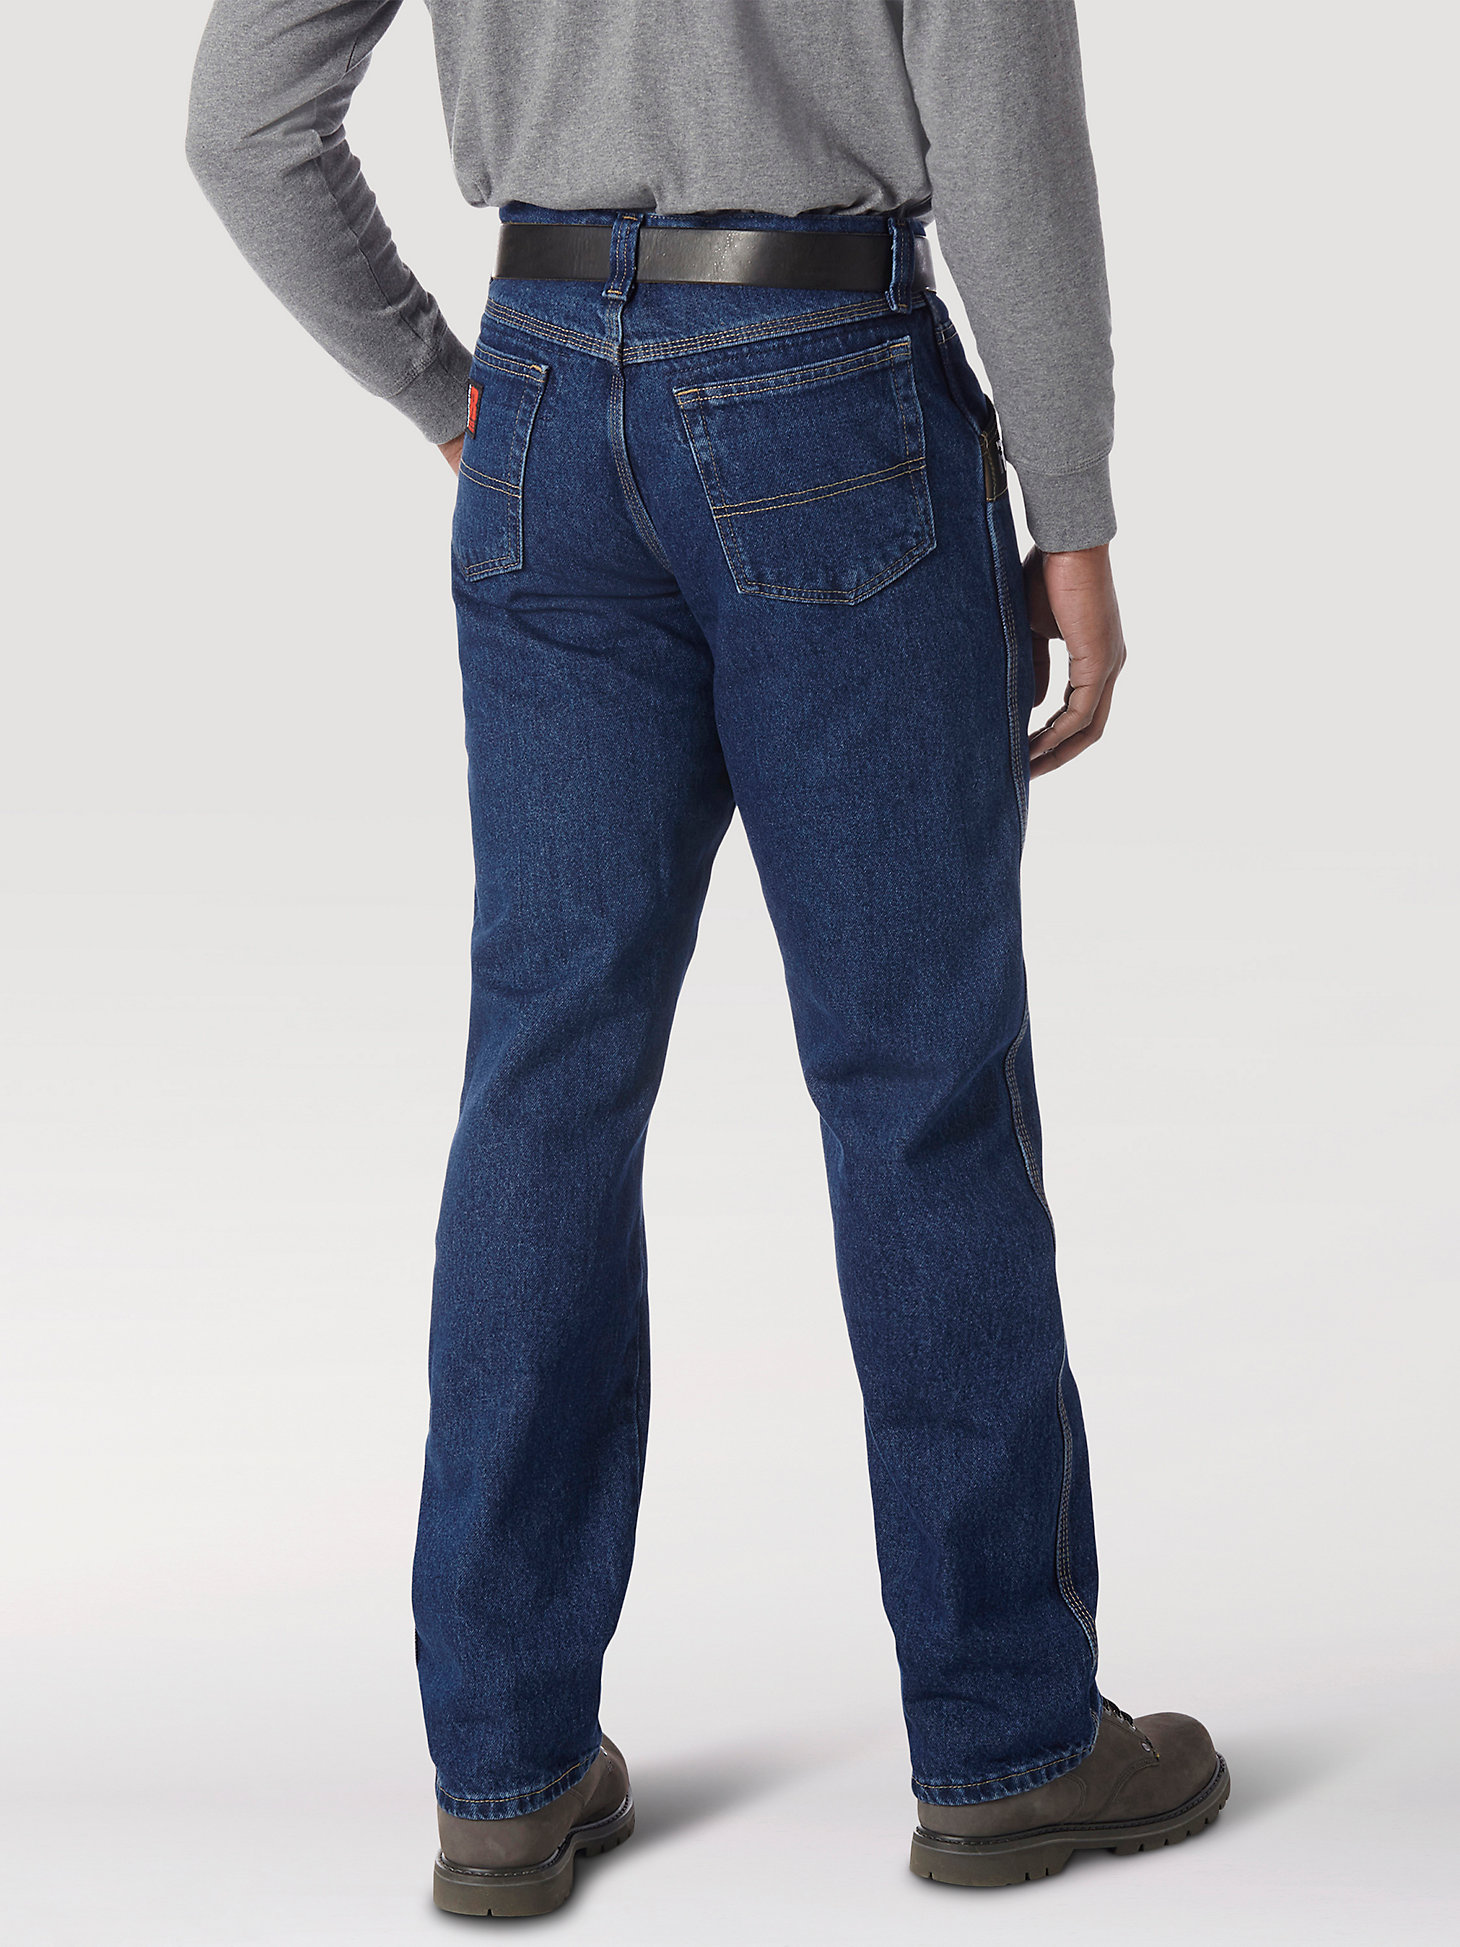 Wrangler® RIGGS Workwear® Five Pocket Jean in Antique Indigo alternative view 2